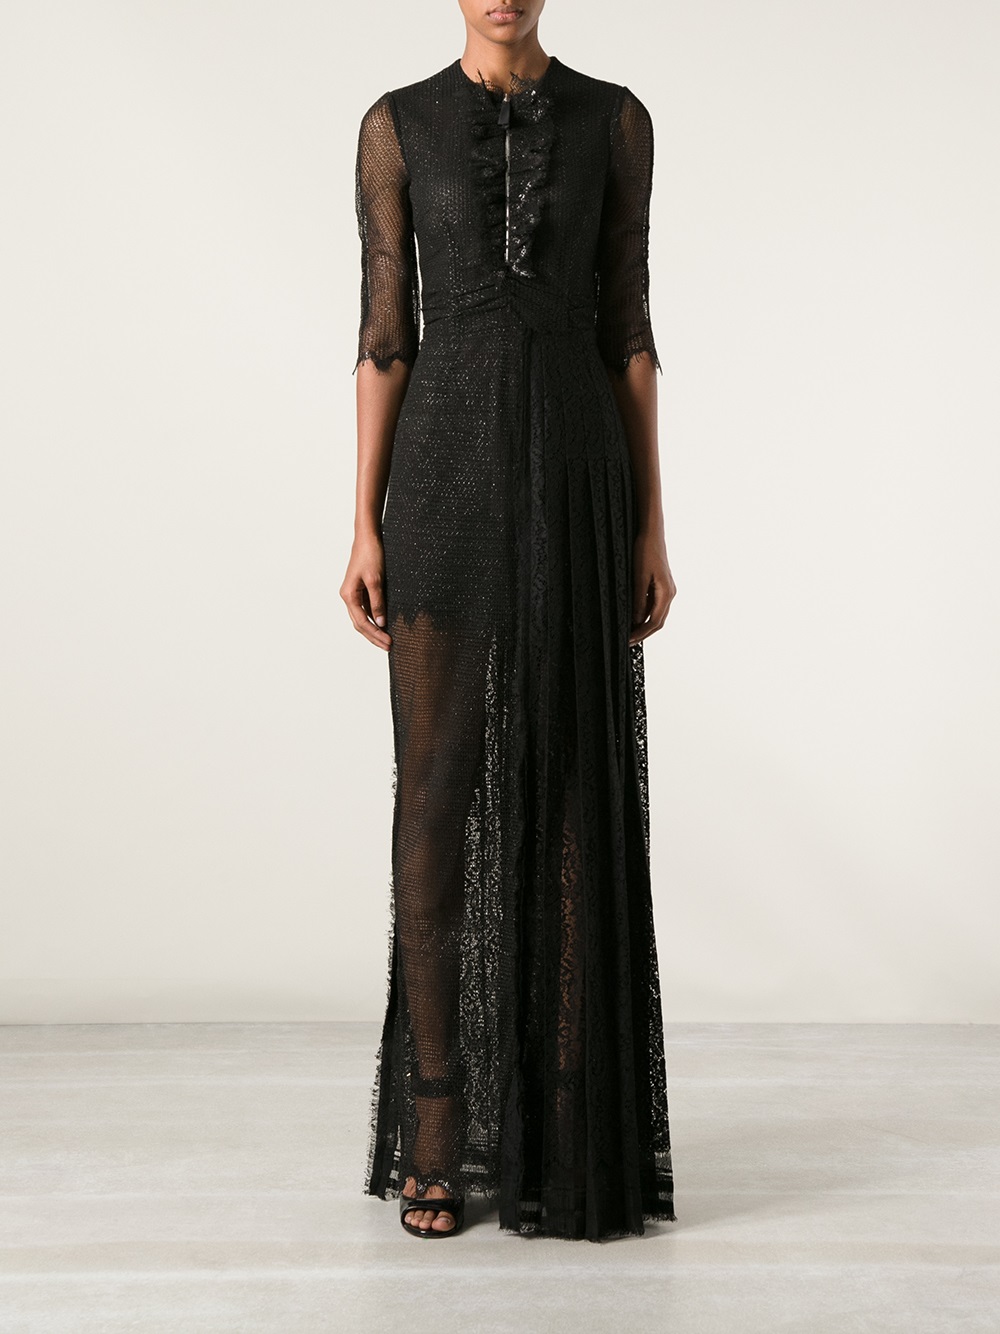 Alessandra rich Netted Silver Shimmer Long Dress in Black | Lyst